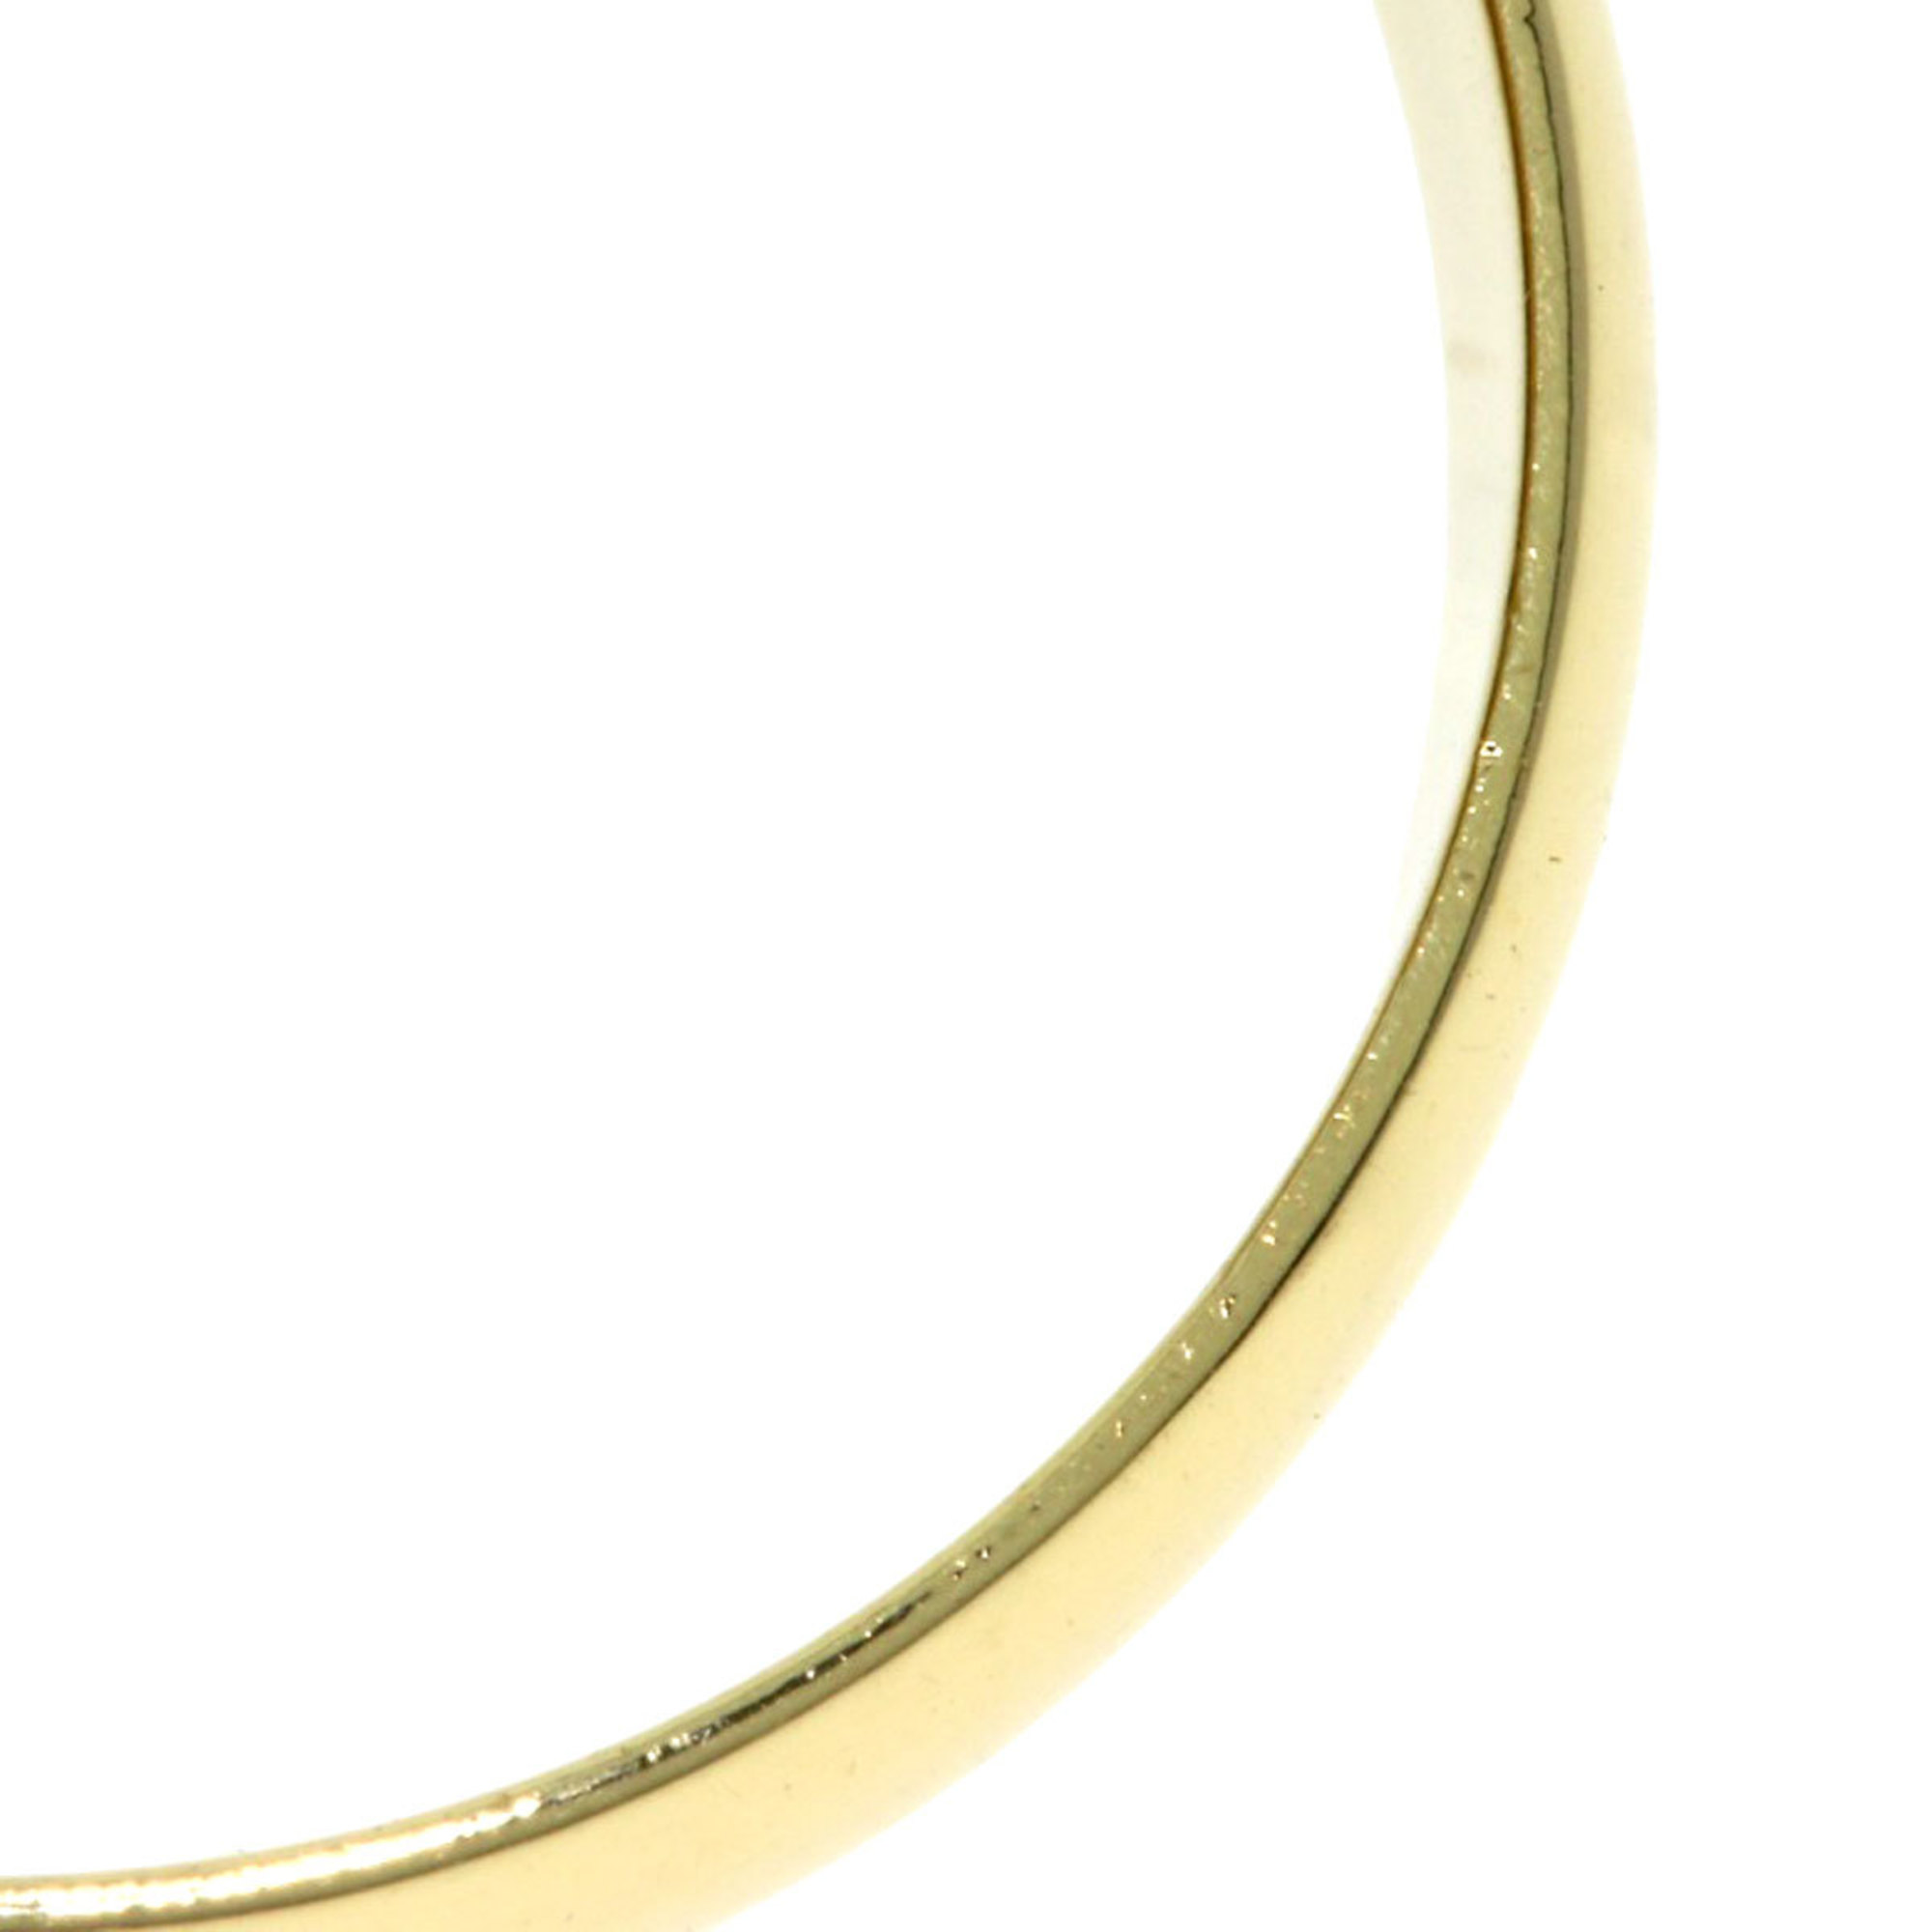 Cartier Trinity #54 Ring, K18 Yellow Gold/K18PG/K18WG, Women's, CARTIER